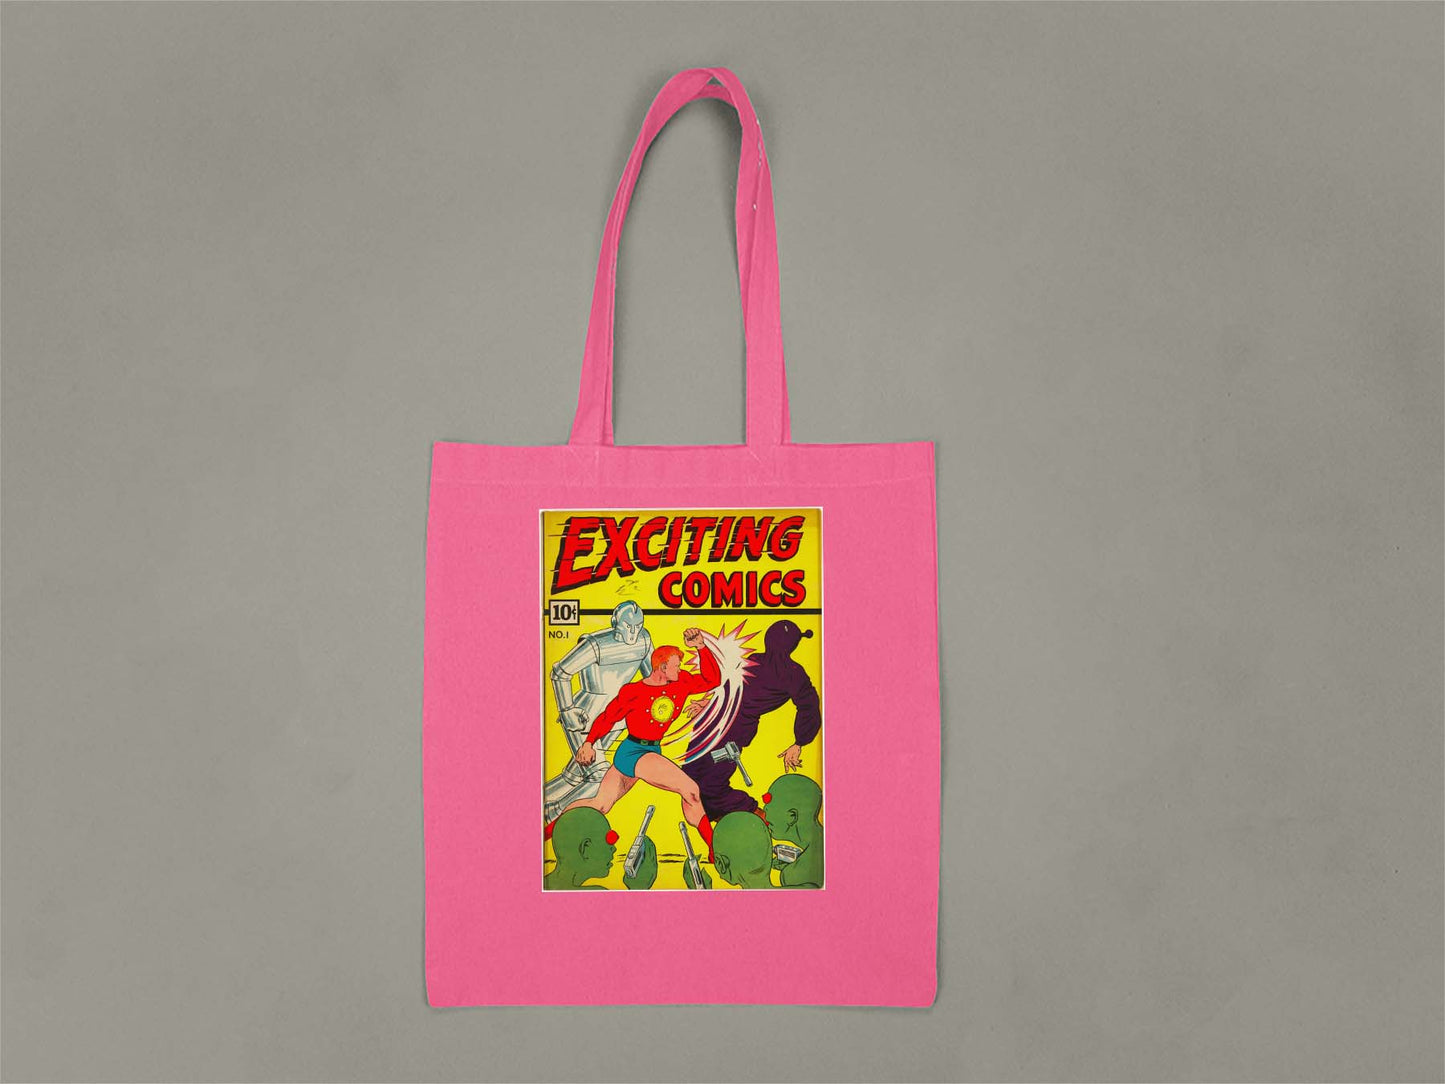 Exciting Comics No.1 Tote Bag  Hot Pink